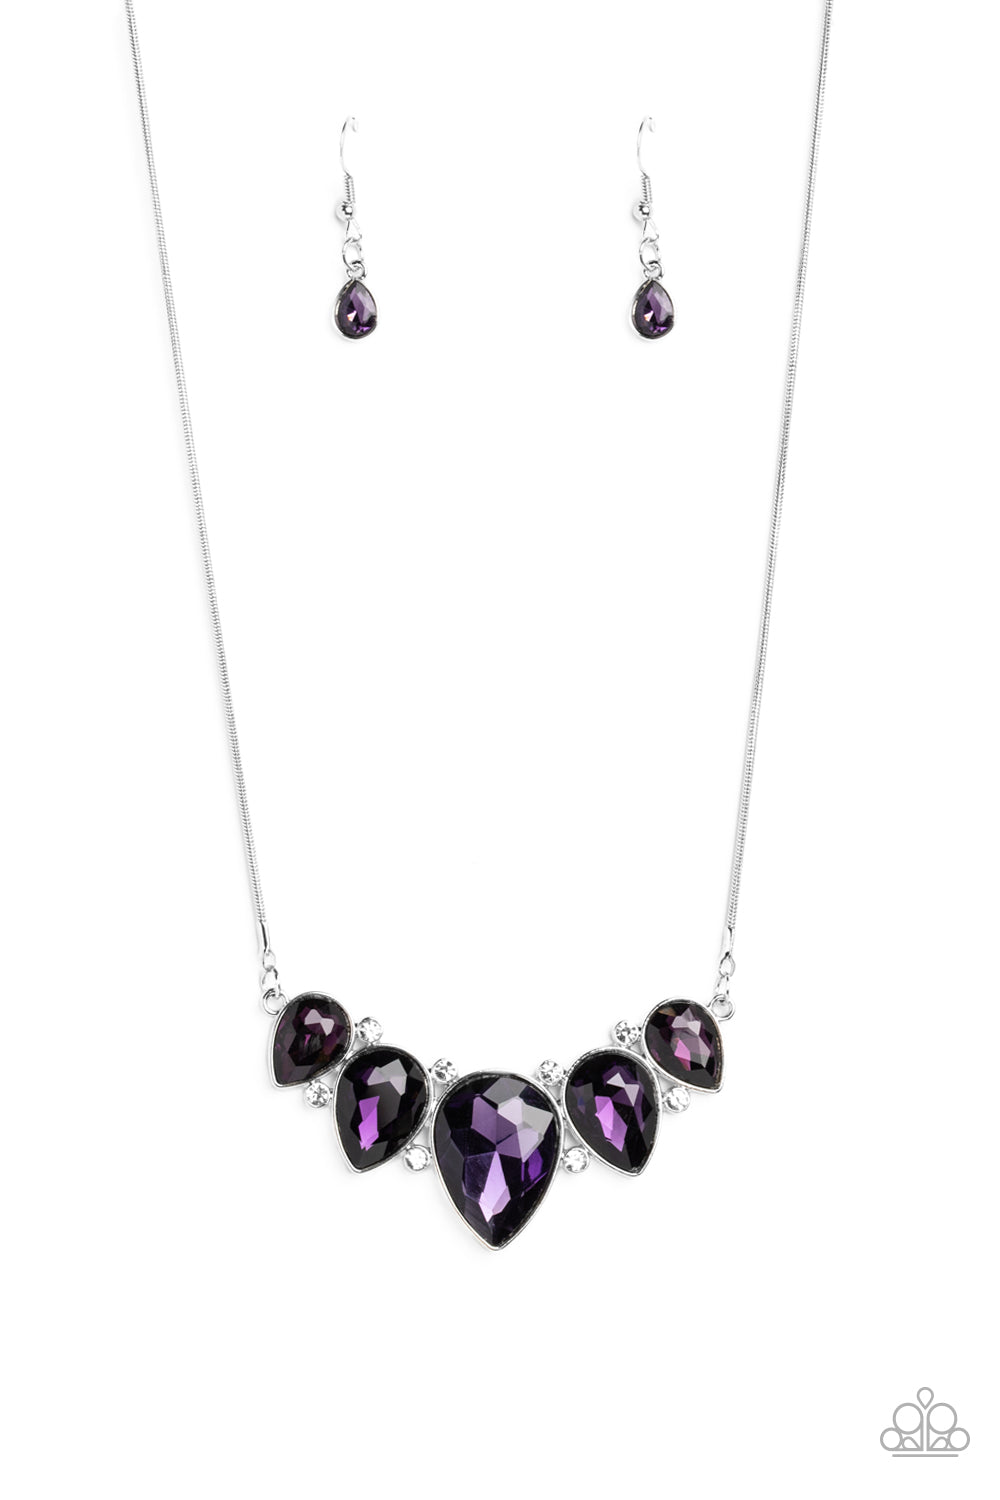 Regally Refined - Purple Necklace